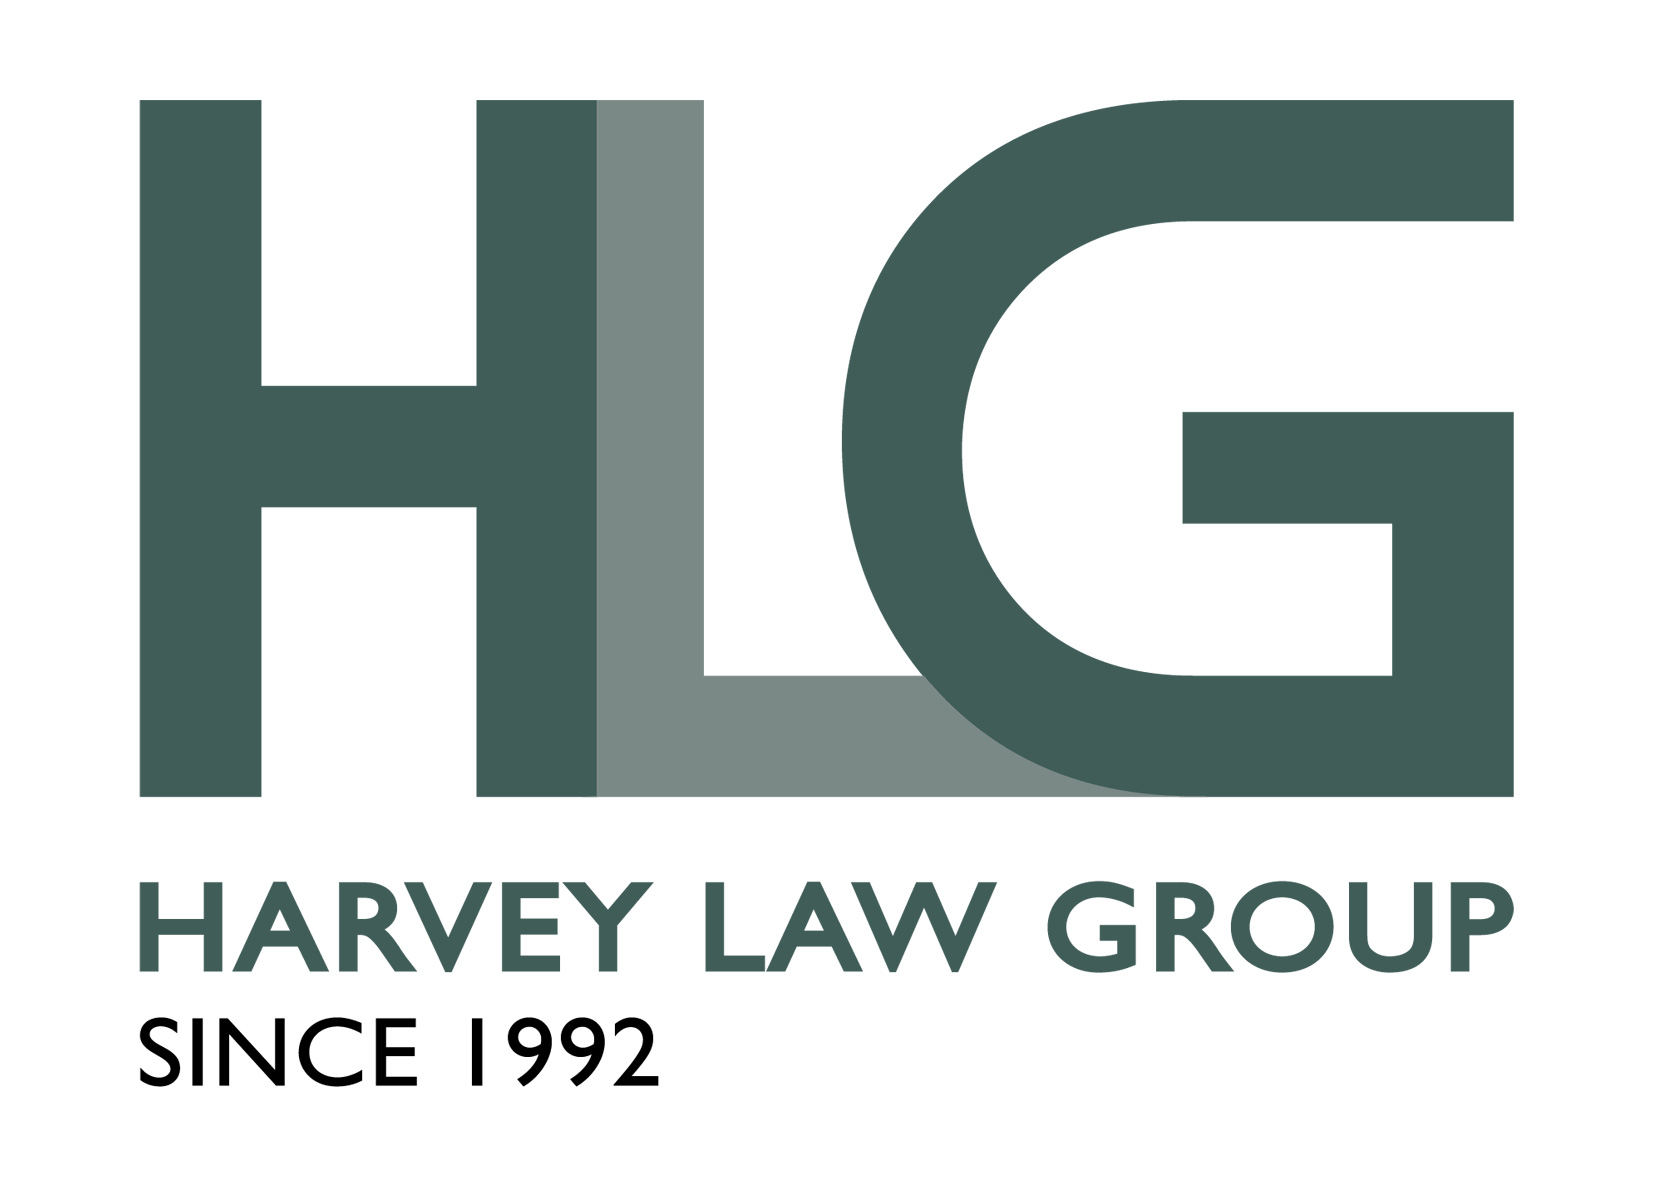 Harvey Law Group